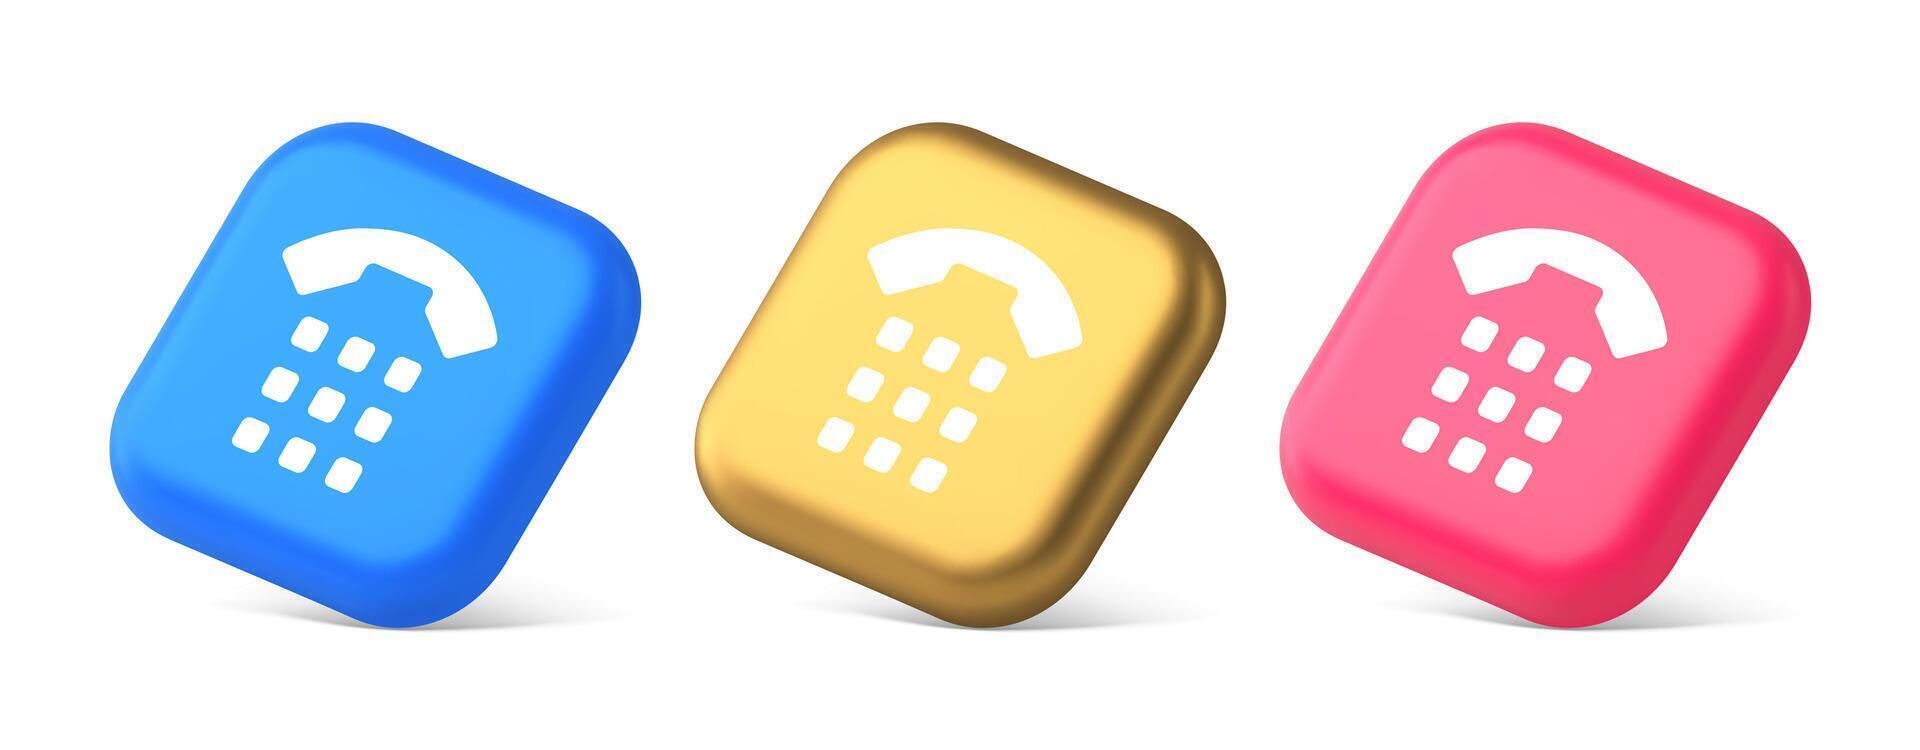 teléfono llamada botón solicitud auricular móvil contacto comunicación 3d realista isométrica icono vector